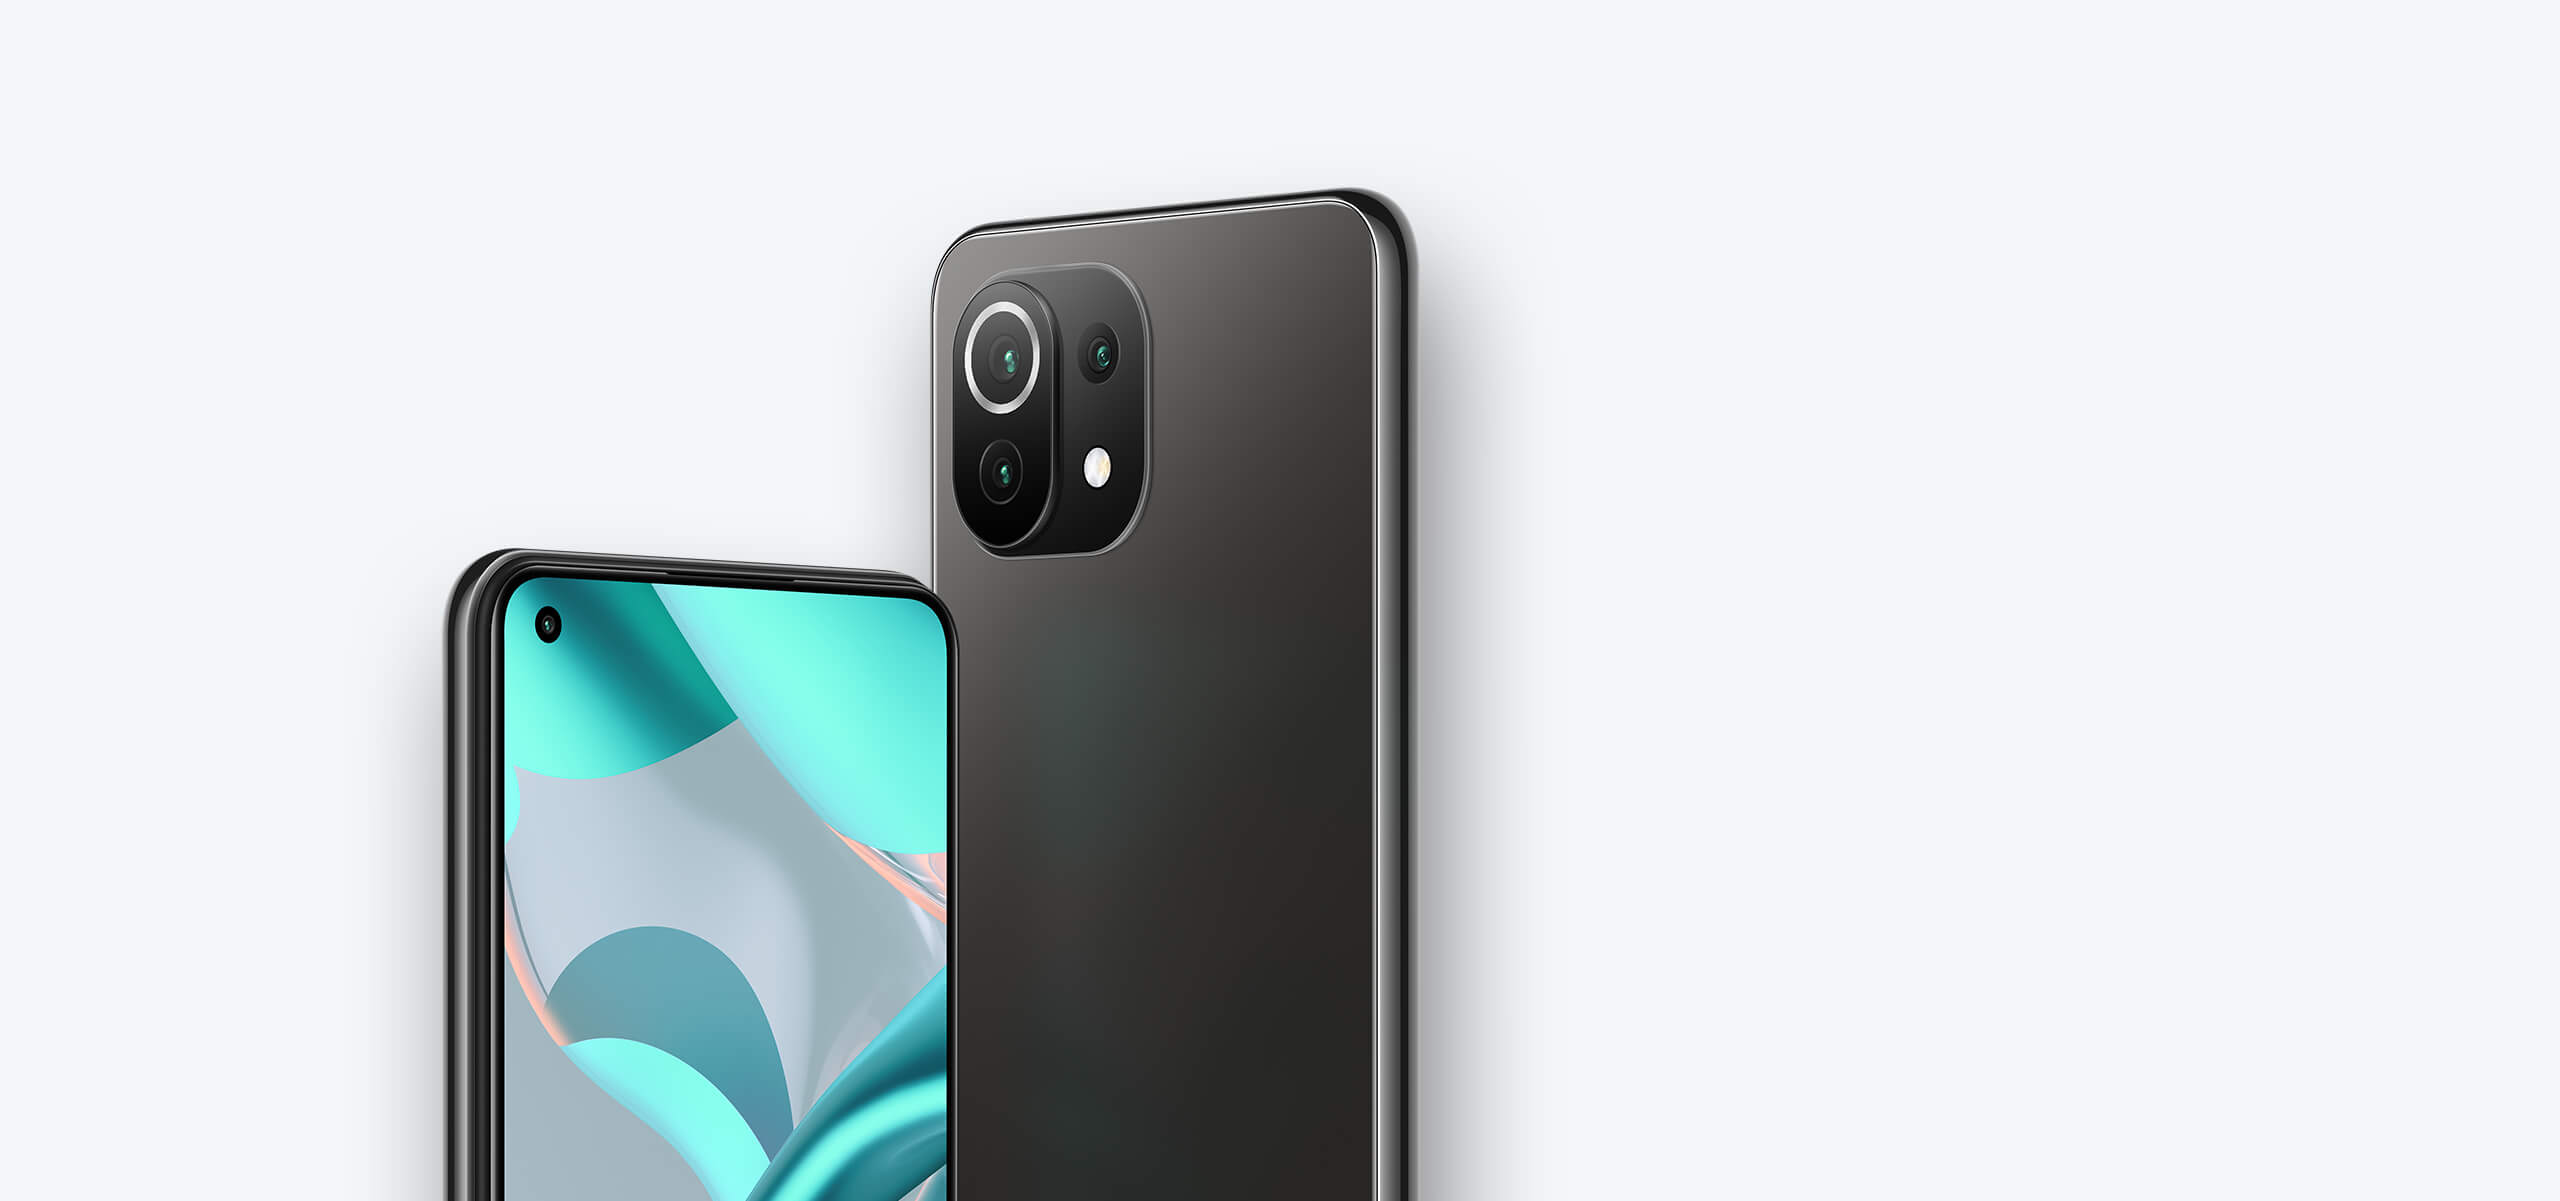 Xiaomi new phone Xiaomi 11 Lite 5G NE (6GB/128GB ) Price in Bangladesh 2022